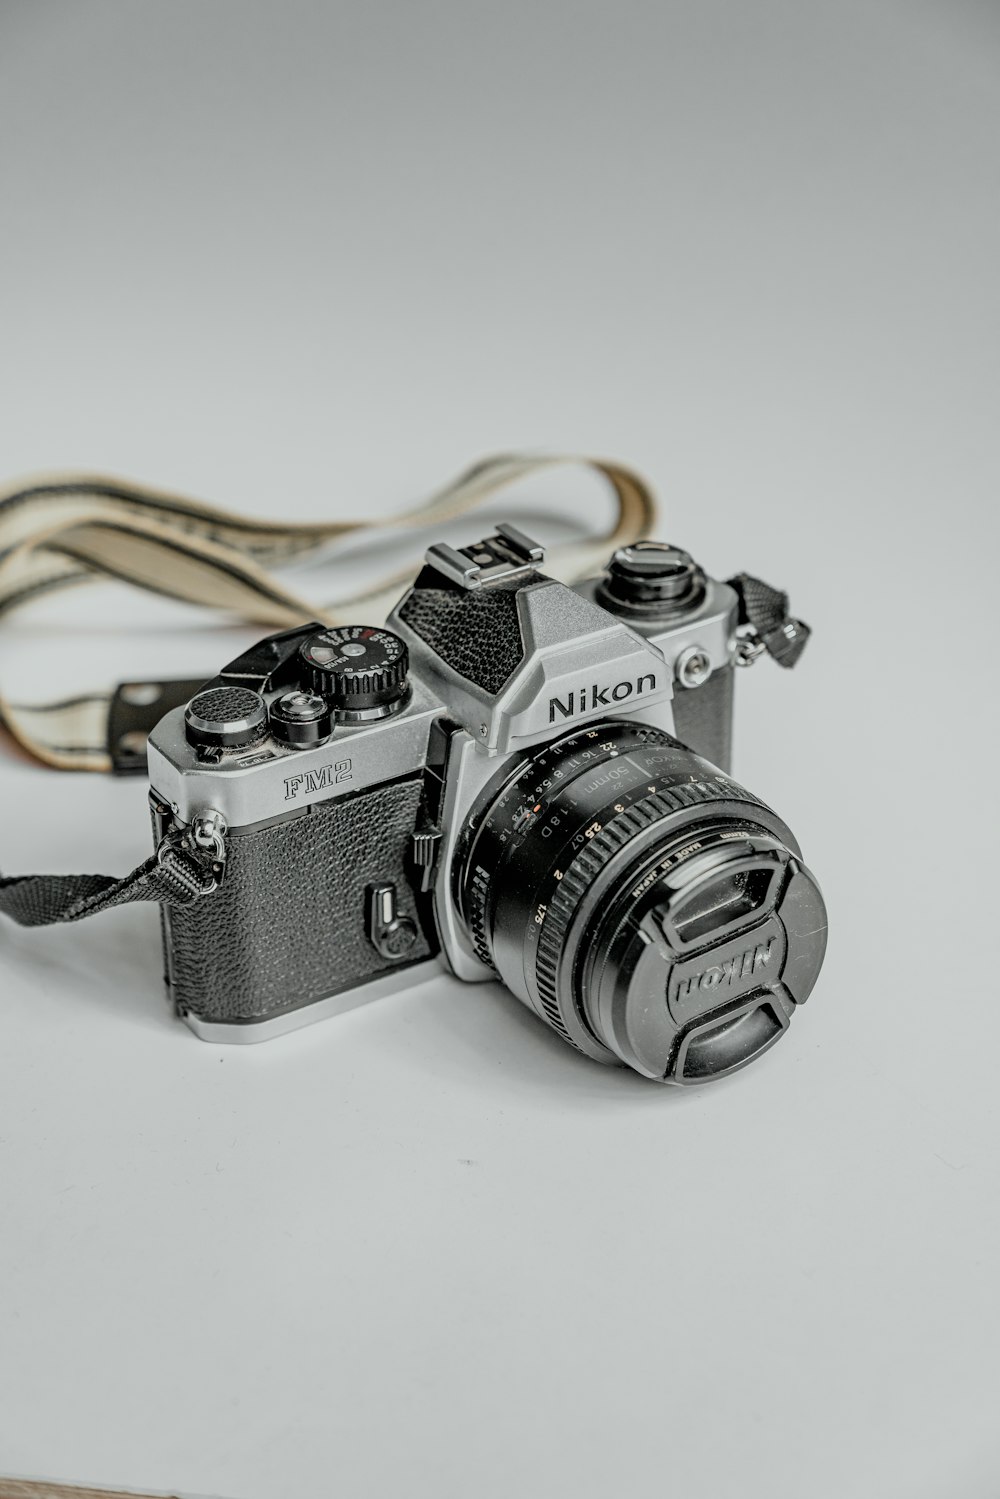 Fotocamera reflex digitale Nikon nera e argento